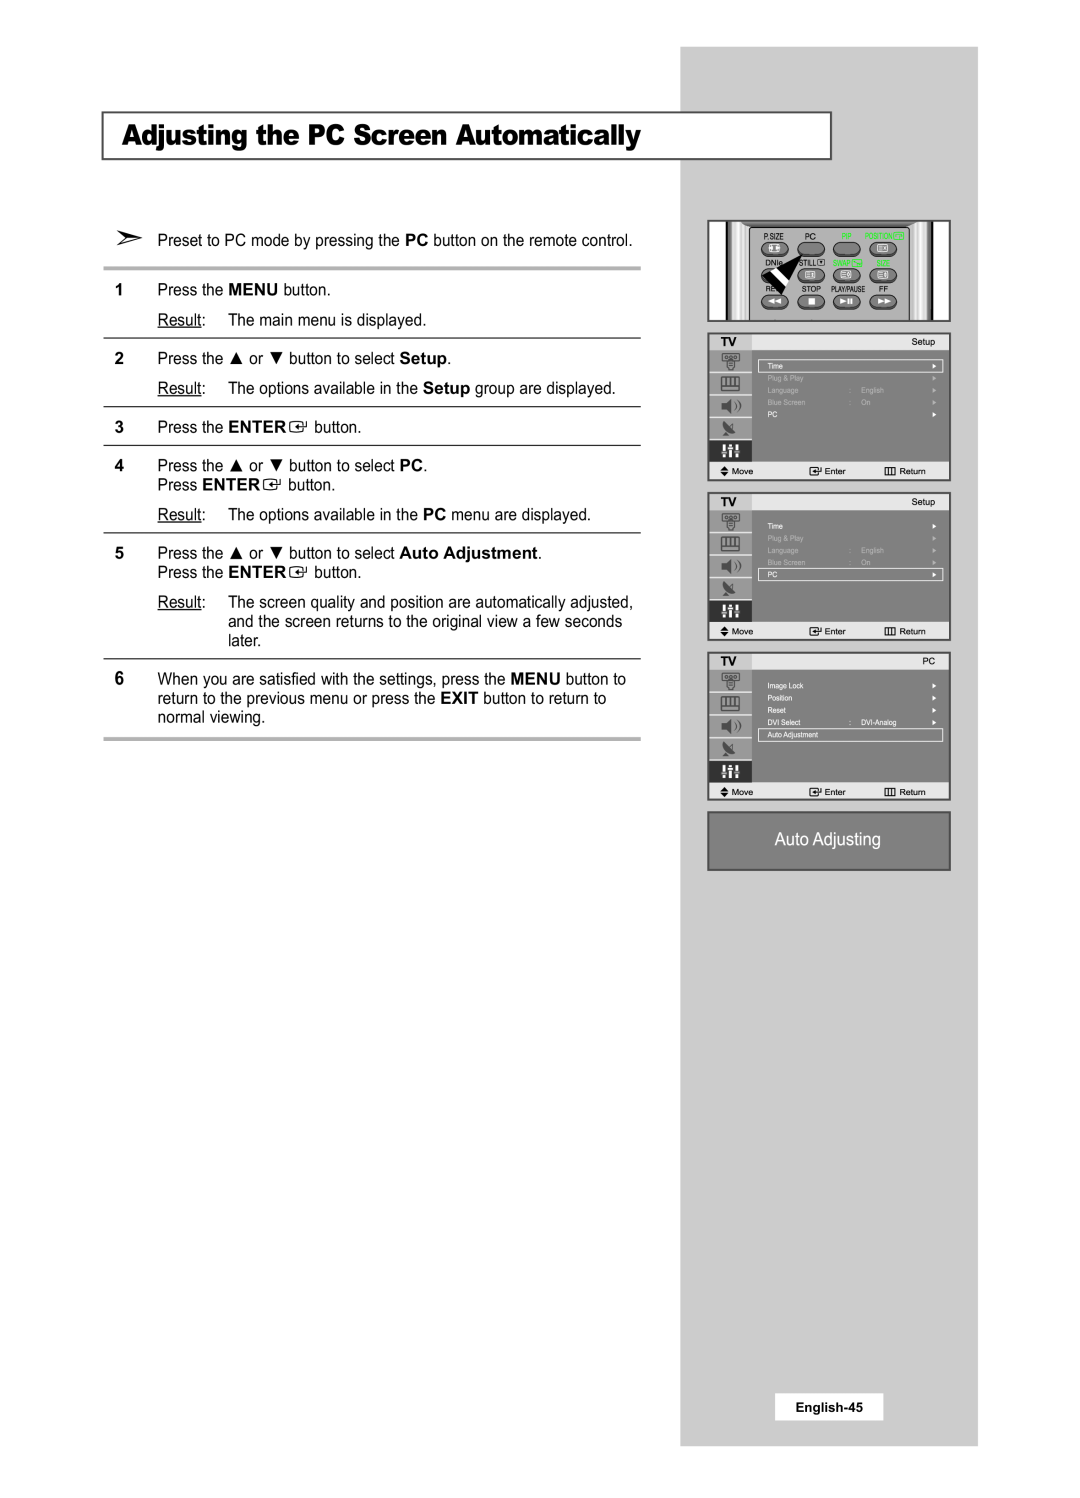 Samsung LA22N21B manual Adjusting the PC Screen Automatically, English-45 